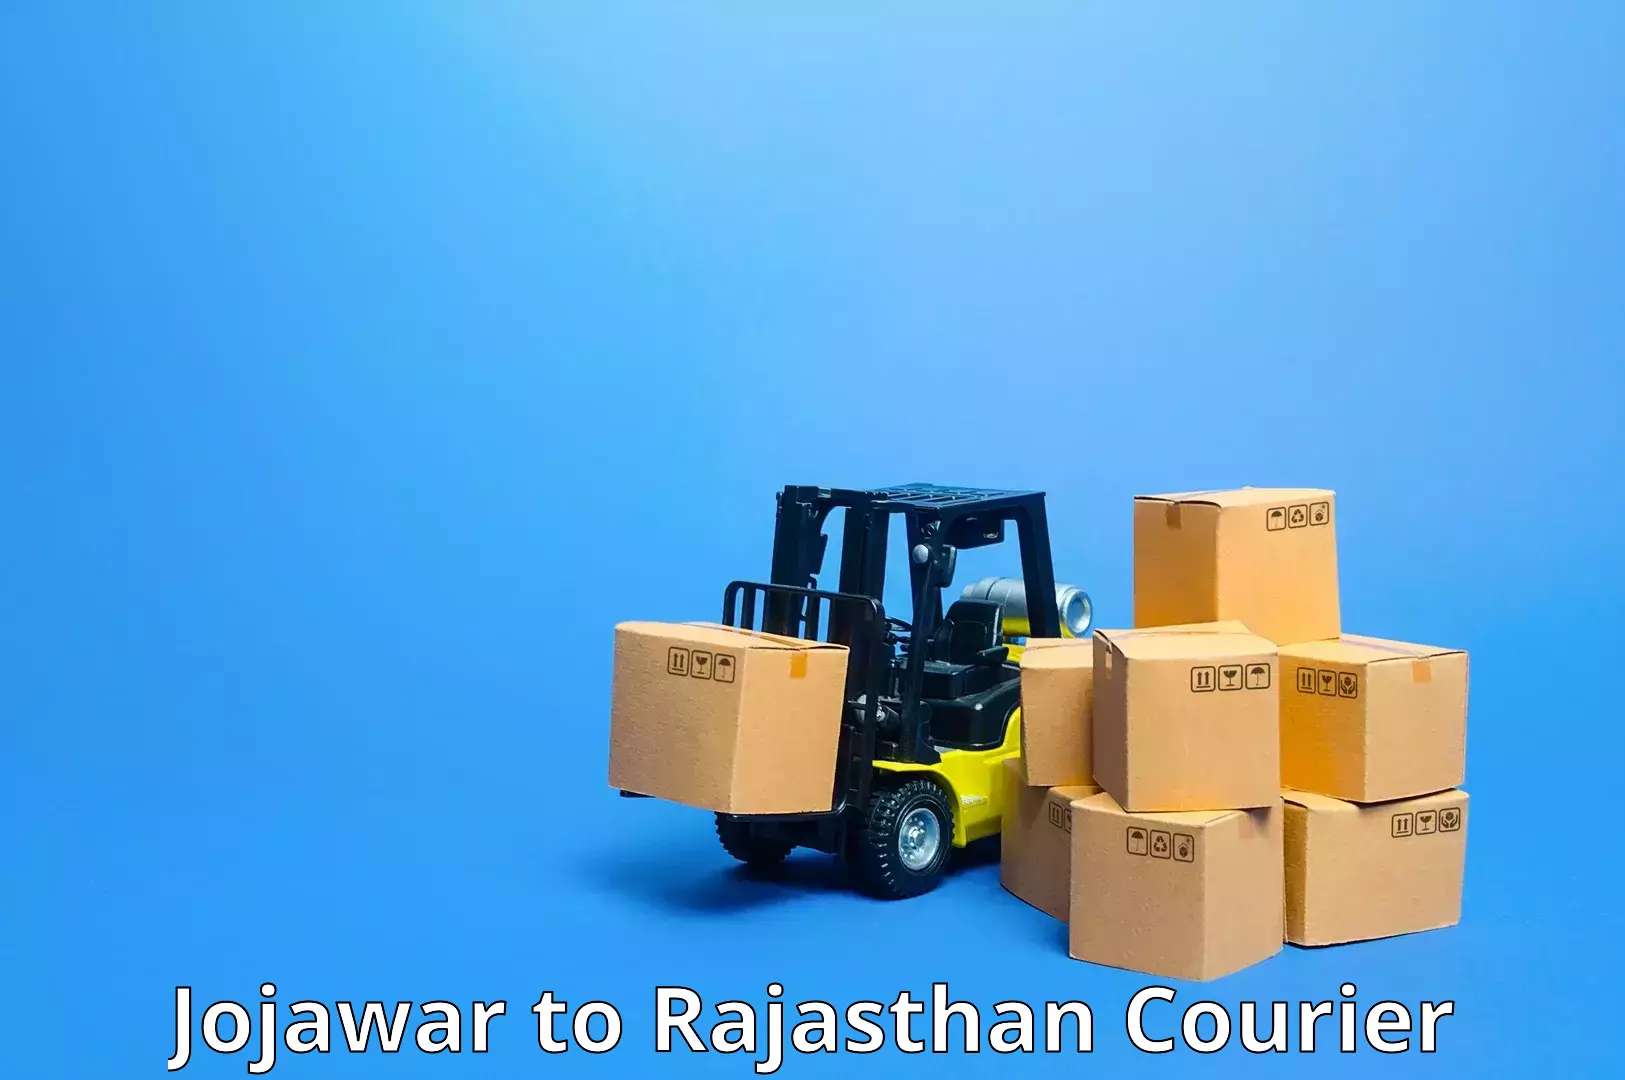 Courier service comparison Jojawar to Anupgarh